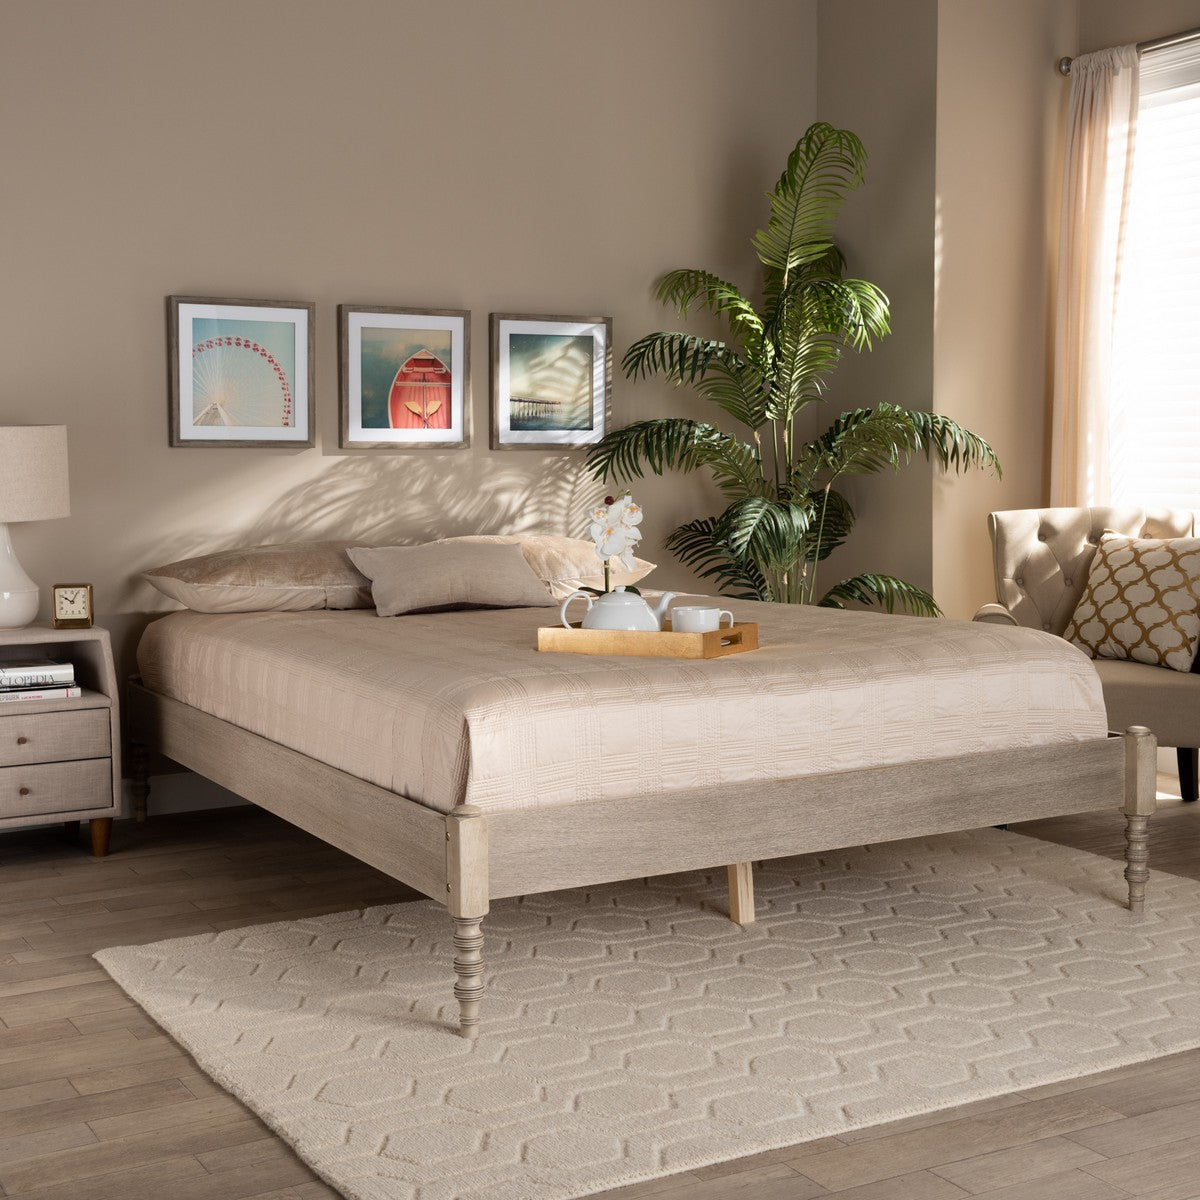 Baxton Studio Cielle French Bohemian Antique White Oak Finished Wood Full Size Platform Bed Frame